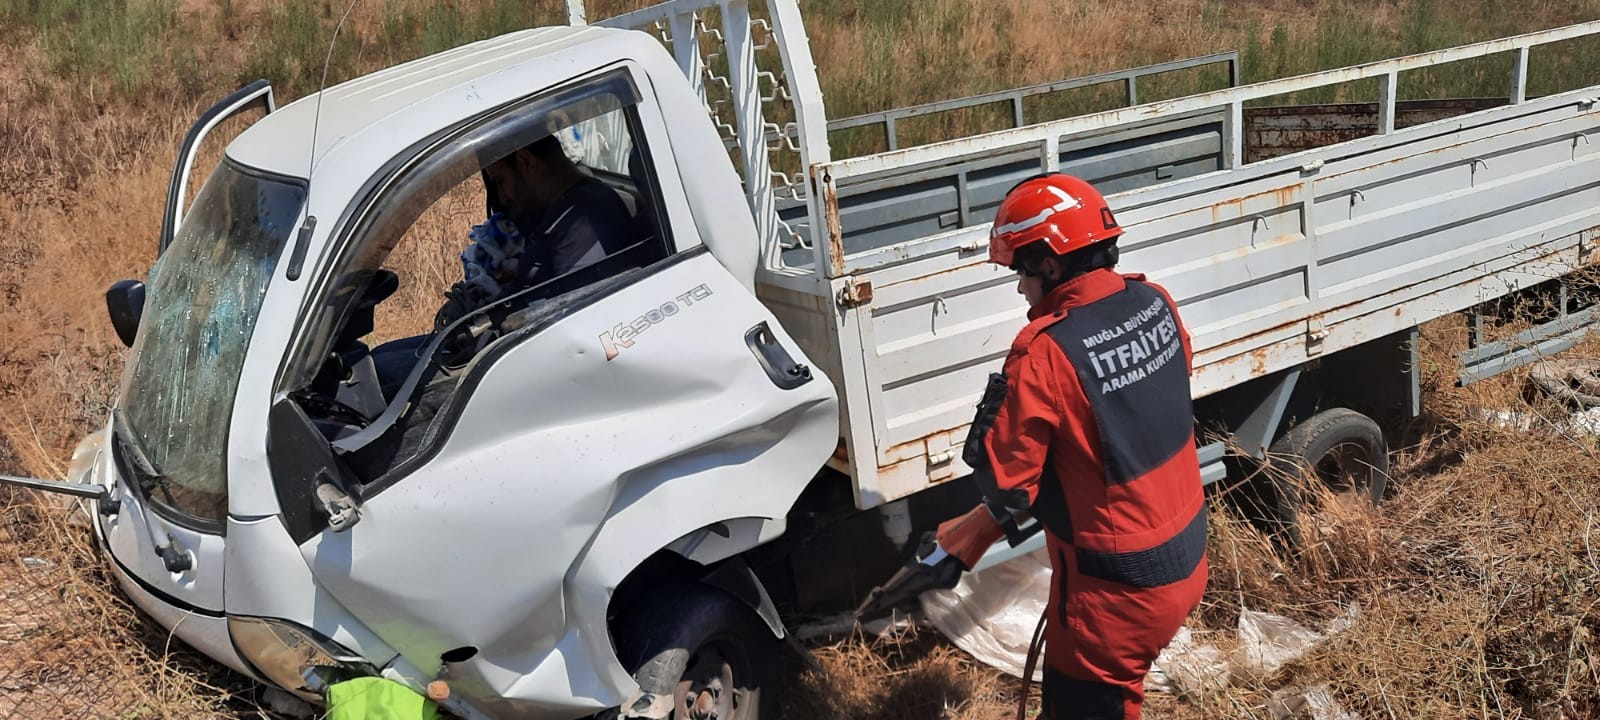 Bodrum’da kamyonet tarlaya uçtu: 2 yaralı